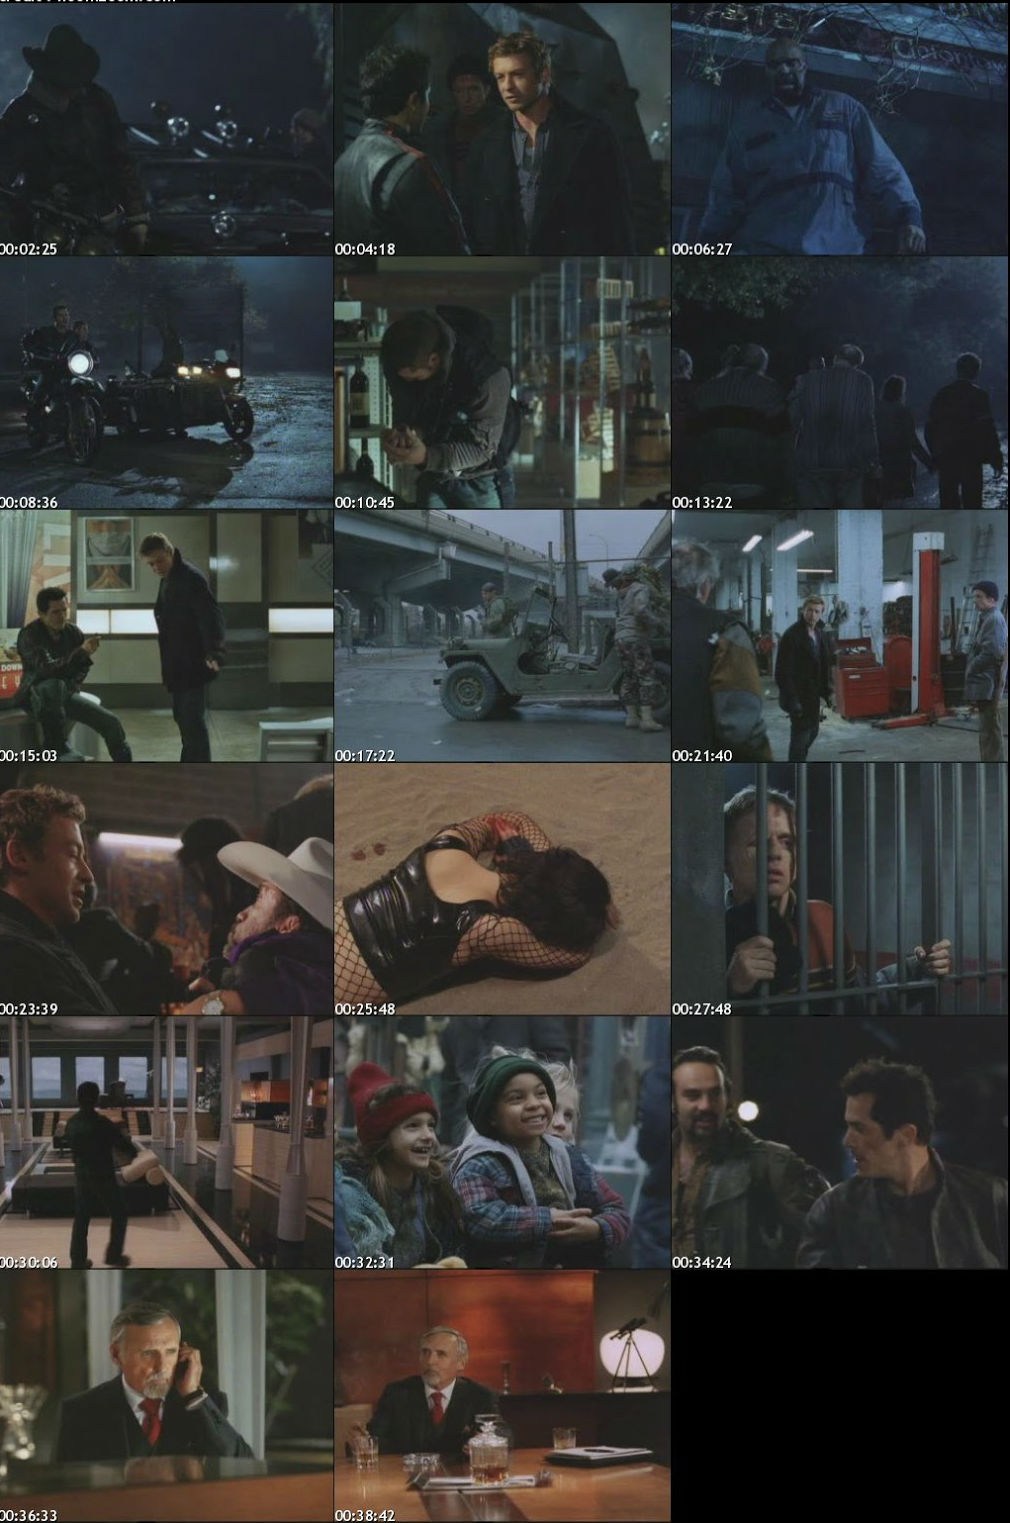 [One2Up] Land of the Dead (2005) ดินแดนแห่งความตาย [VCD Master][พากย์ไทย] LOD_guy2u_s1